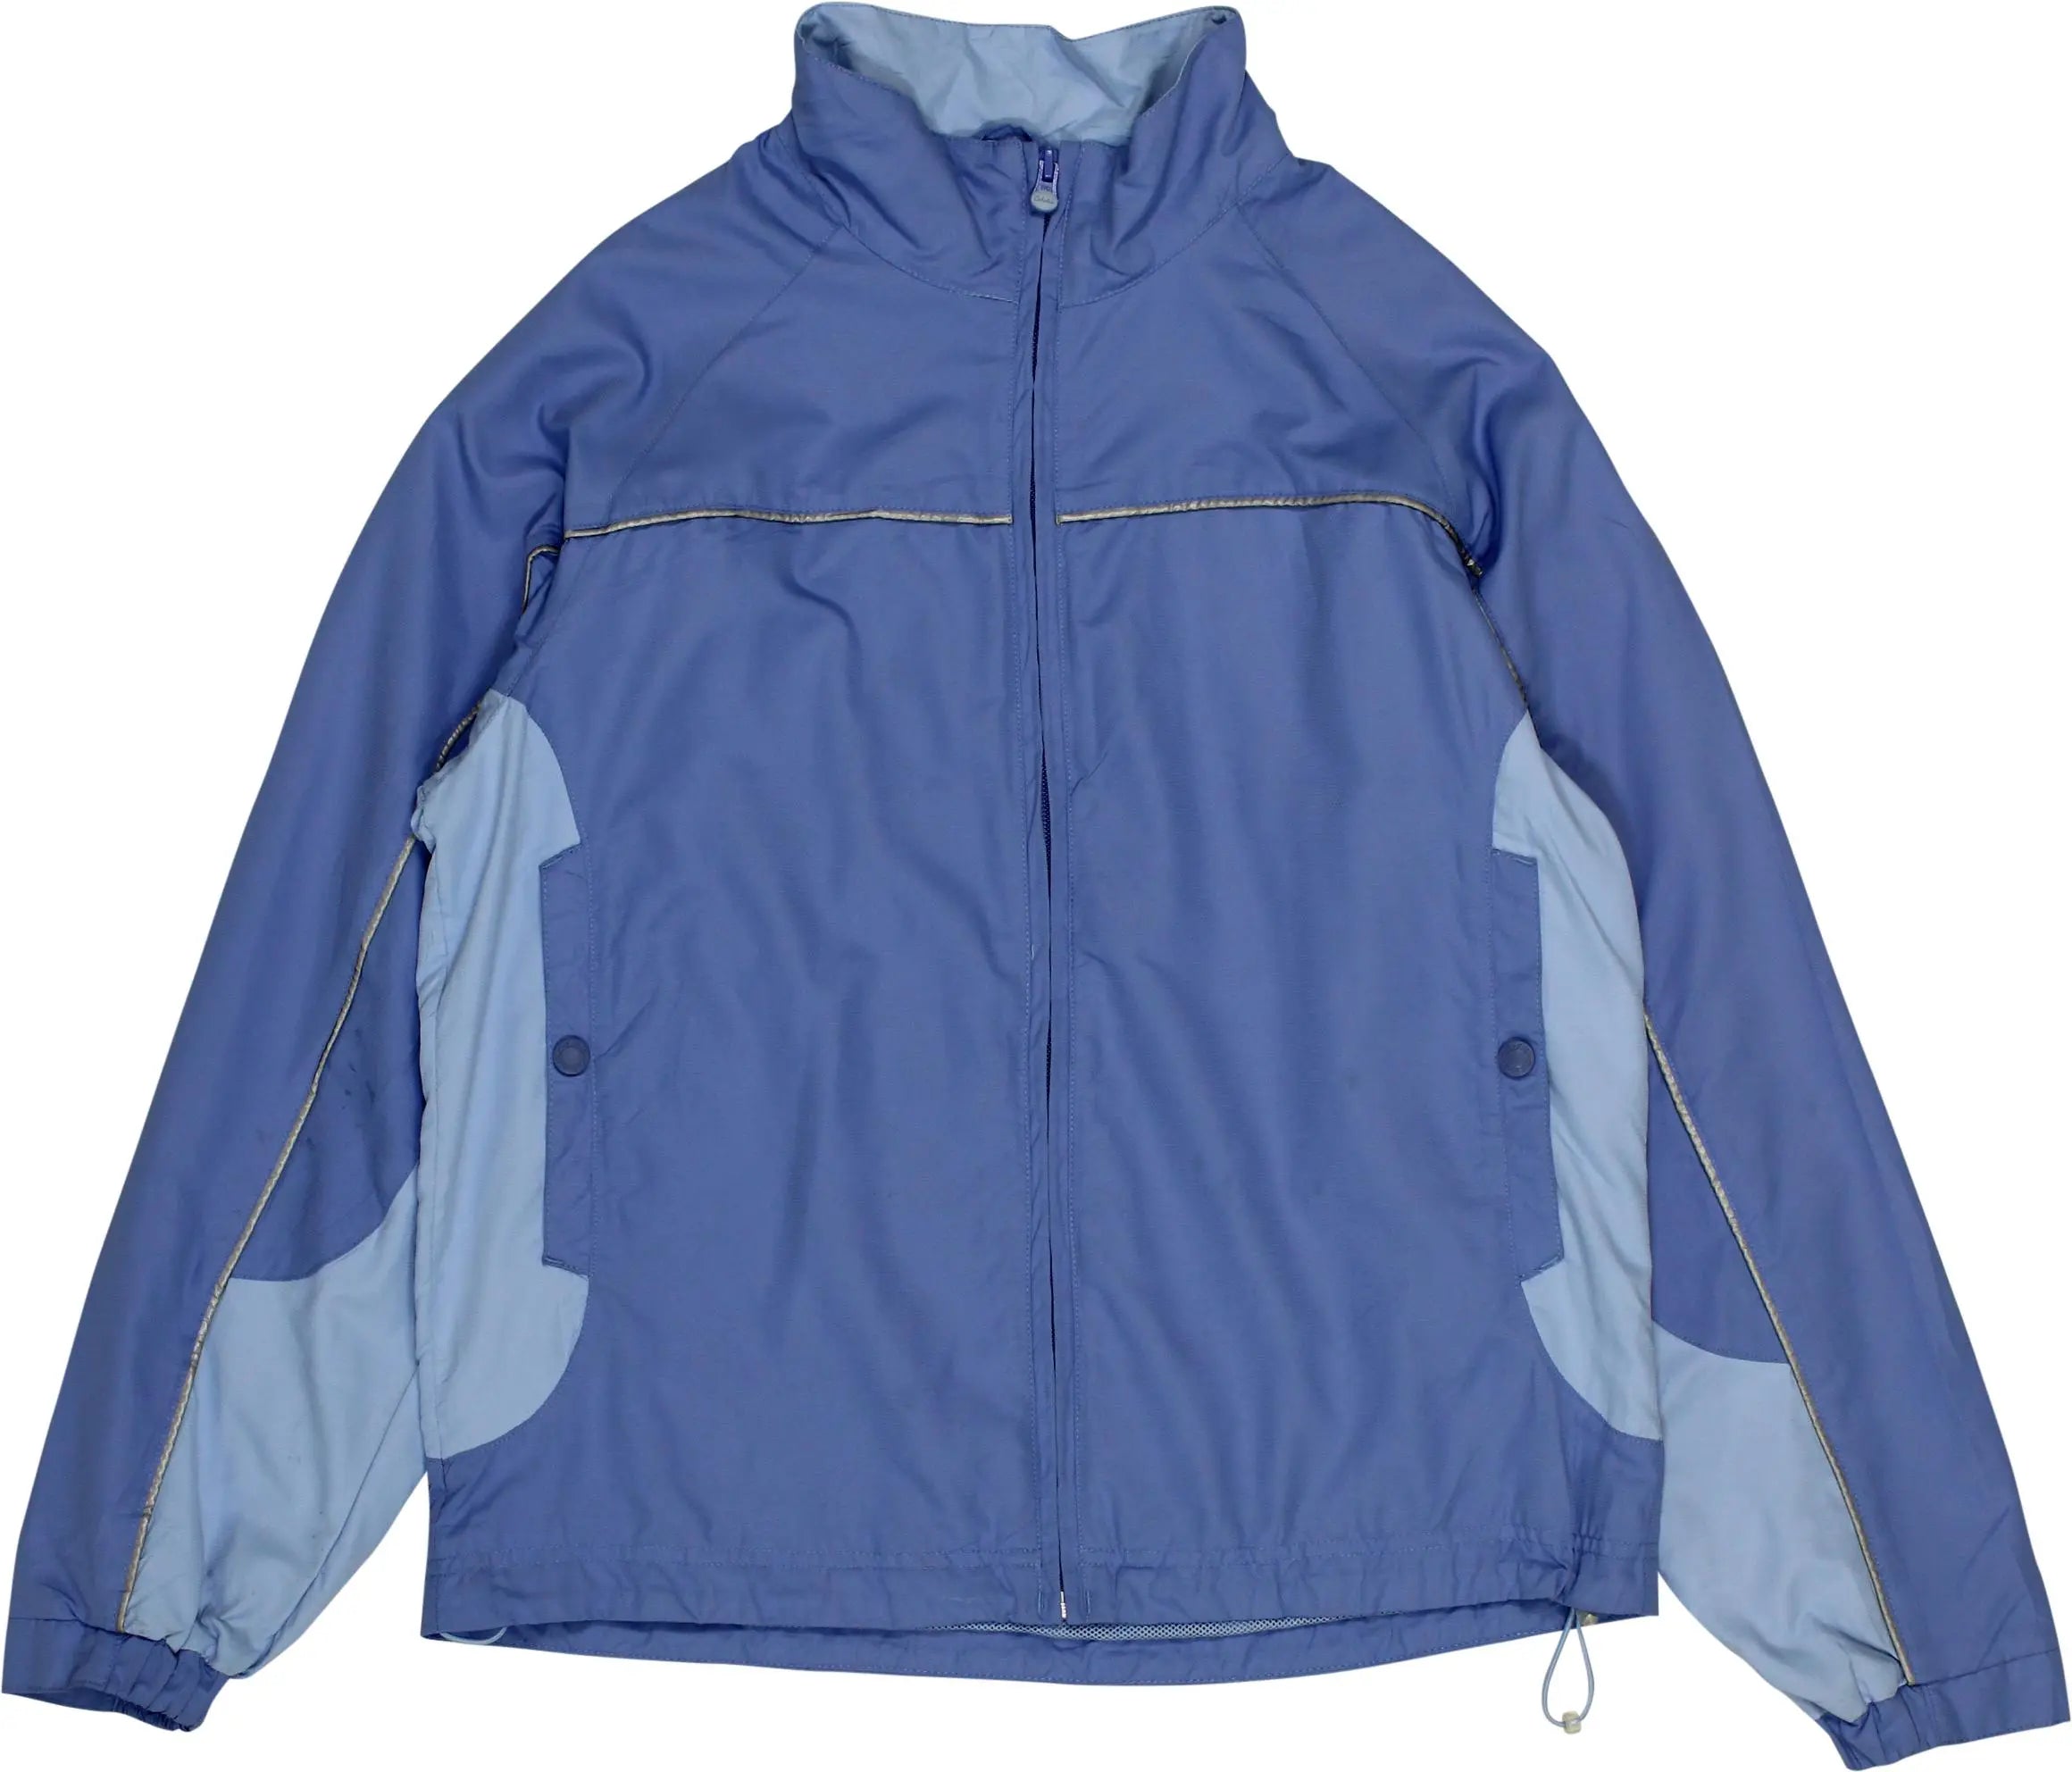 Cabela's - Blue Jacket- ThriftTale.com - Vintage and second handclothing